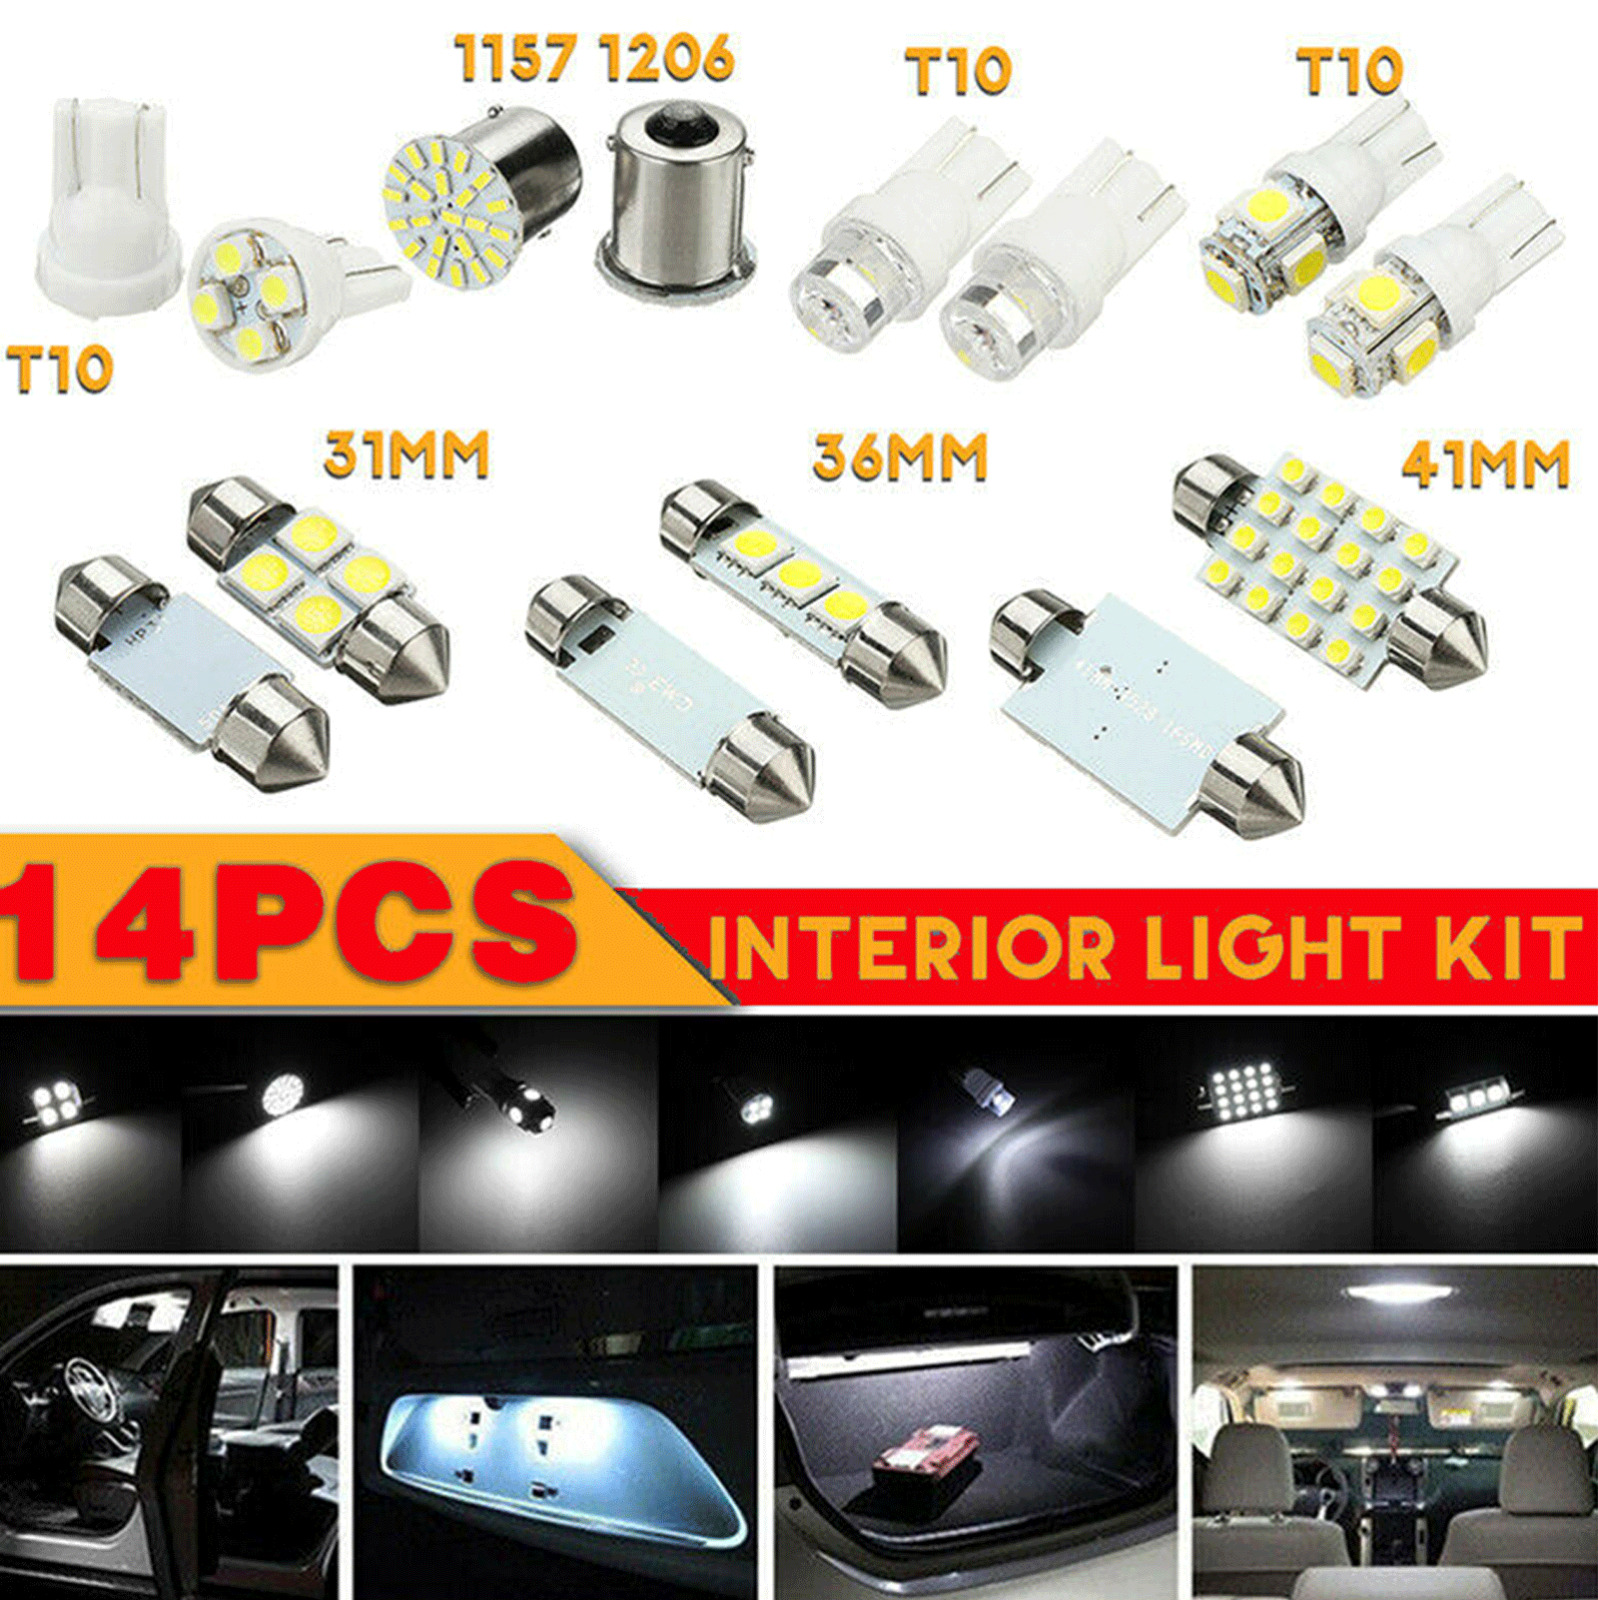 14Pcs T10 36mm LED Interior Lights Car Accessories Kit Map Dome License Honda 